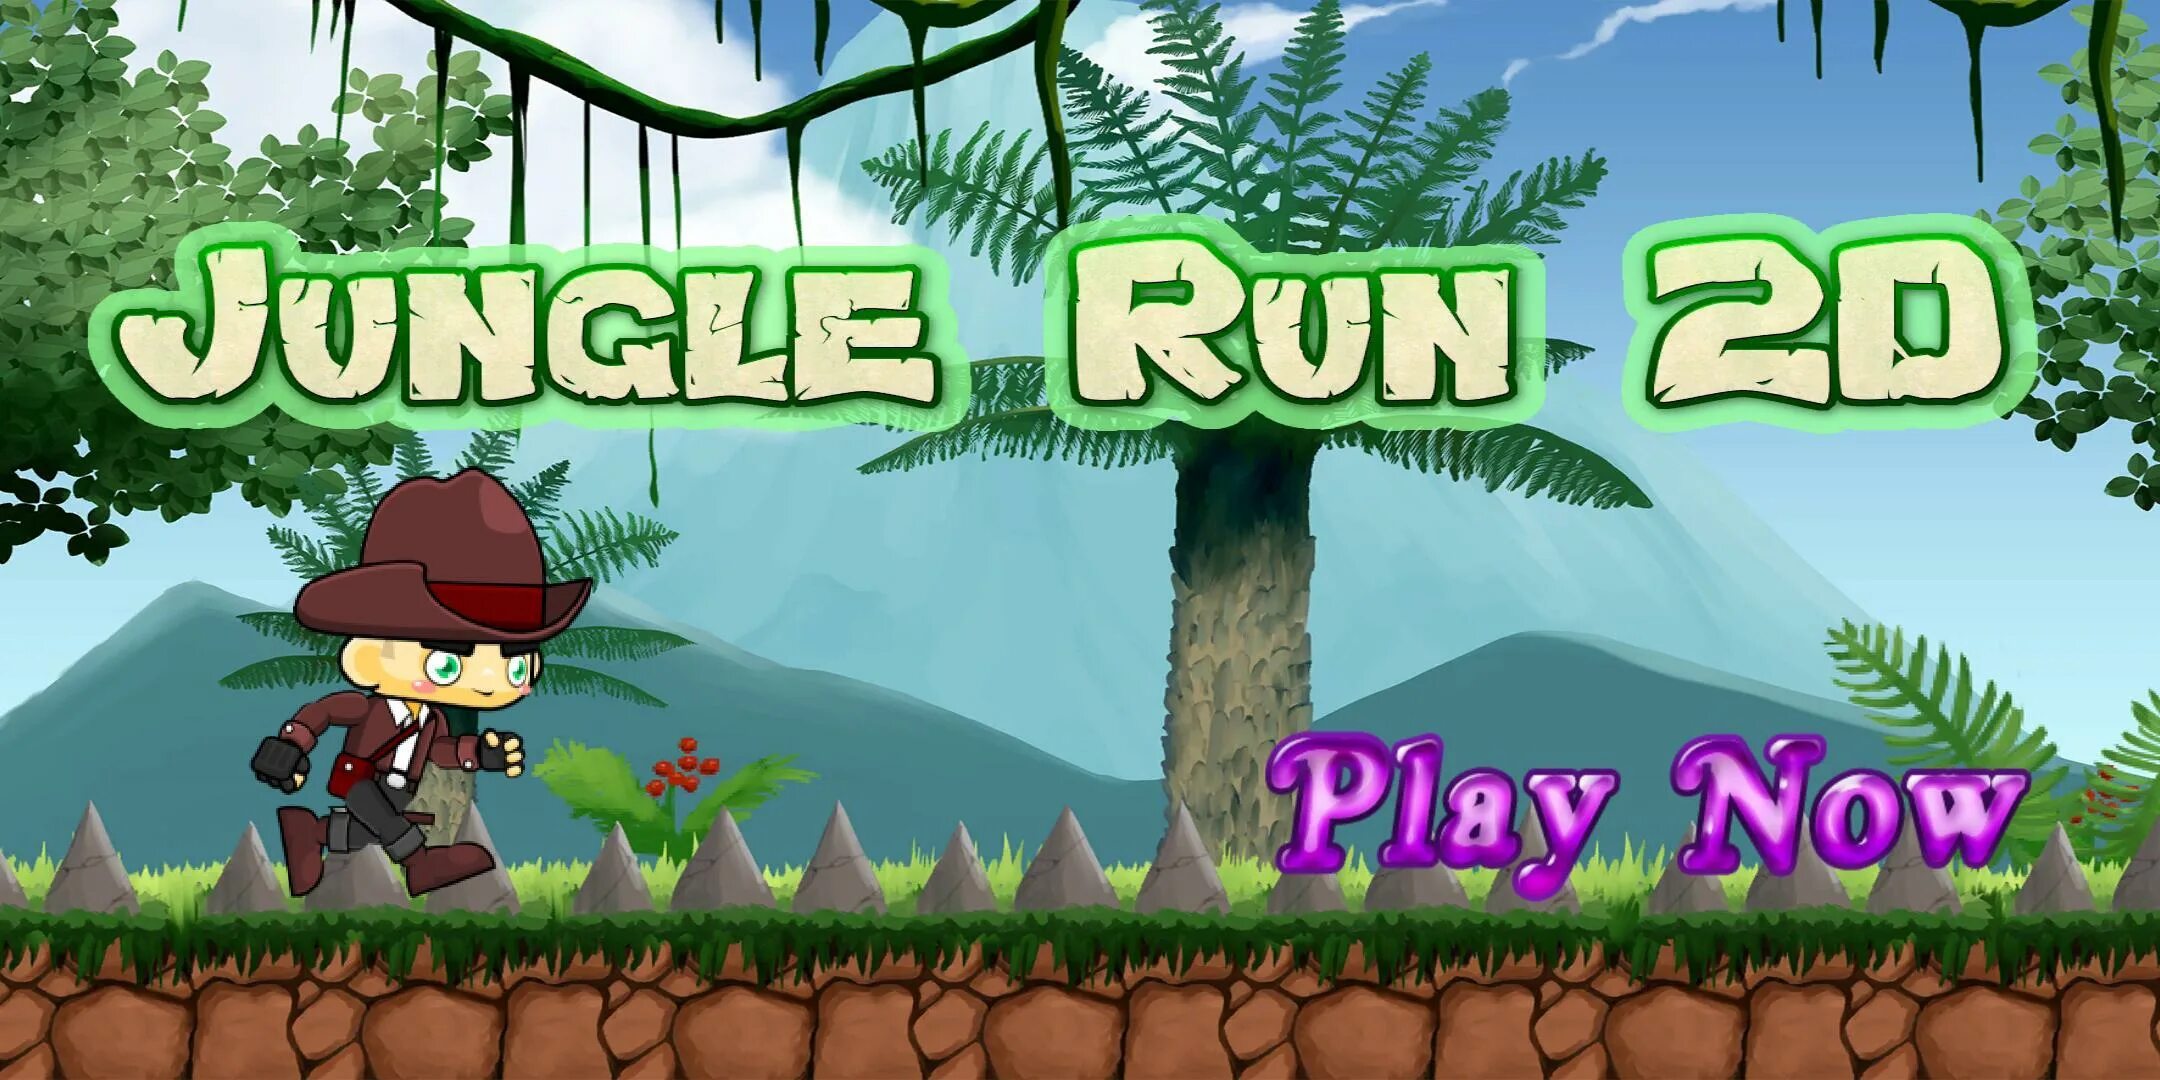 Игра бегалки приключения. Игра бегать в джунглях. Jungle Run 2. Игра бегать SNOWRUNNER на андроид джунгли. Игра на андроид Jungle Puzzle Blitz.